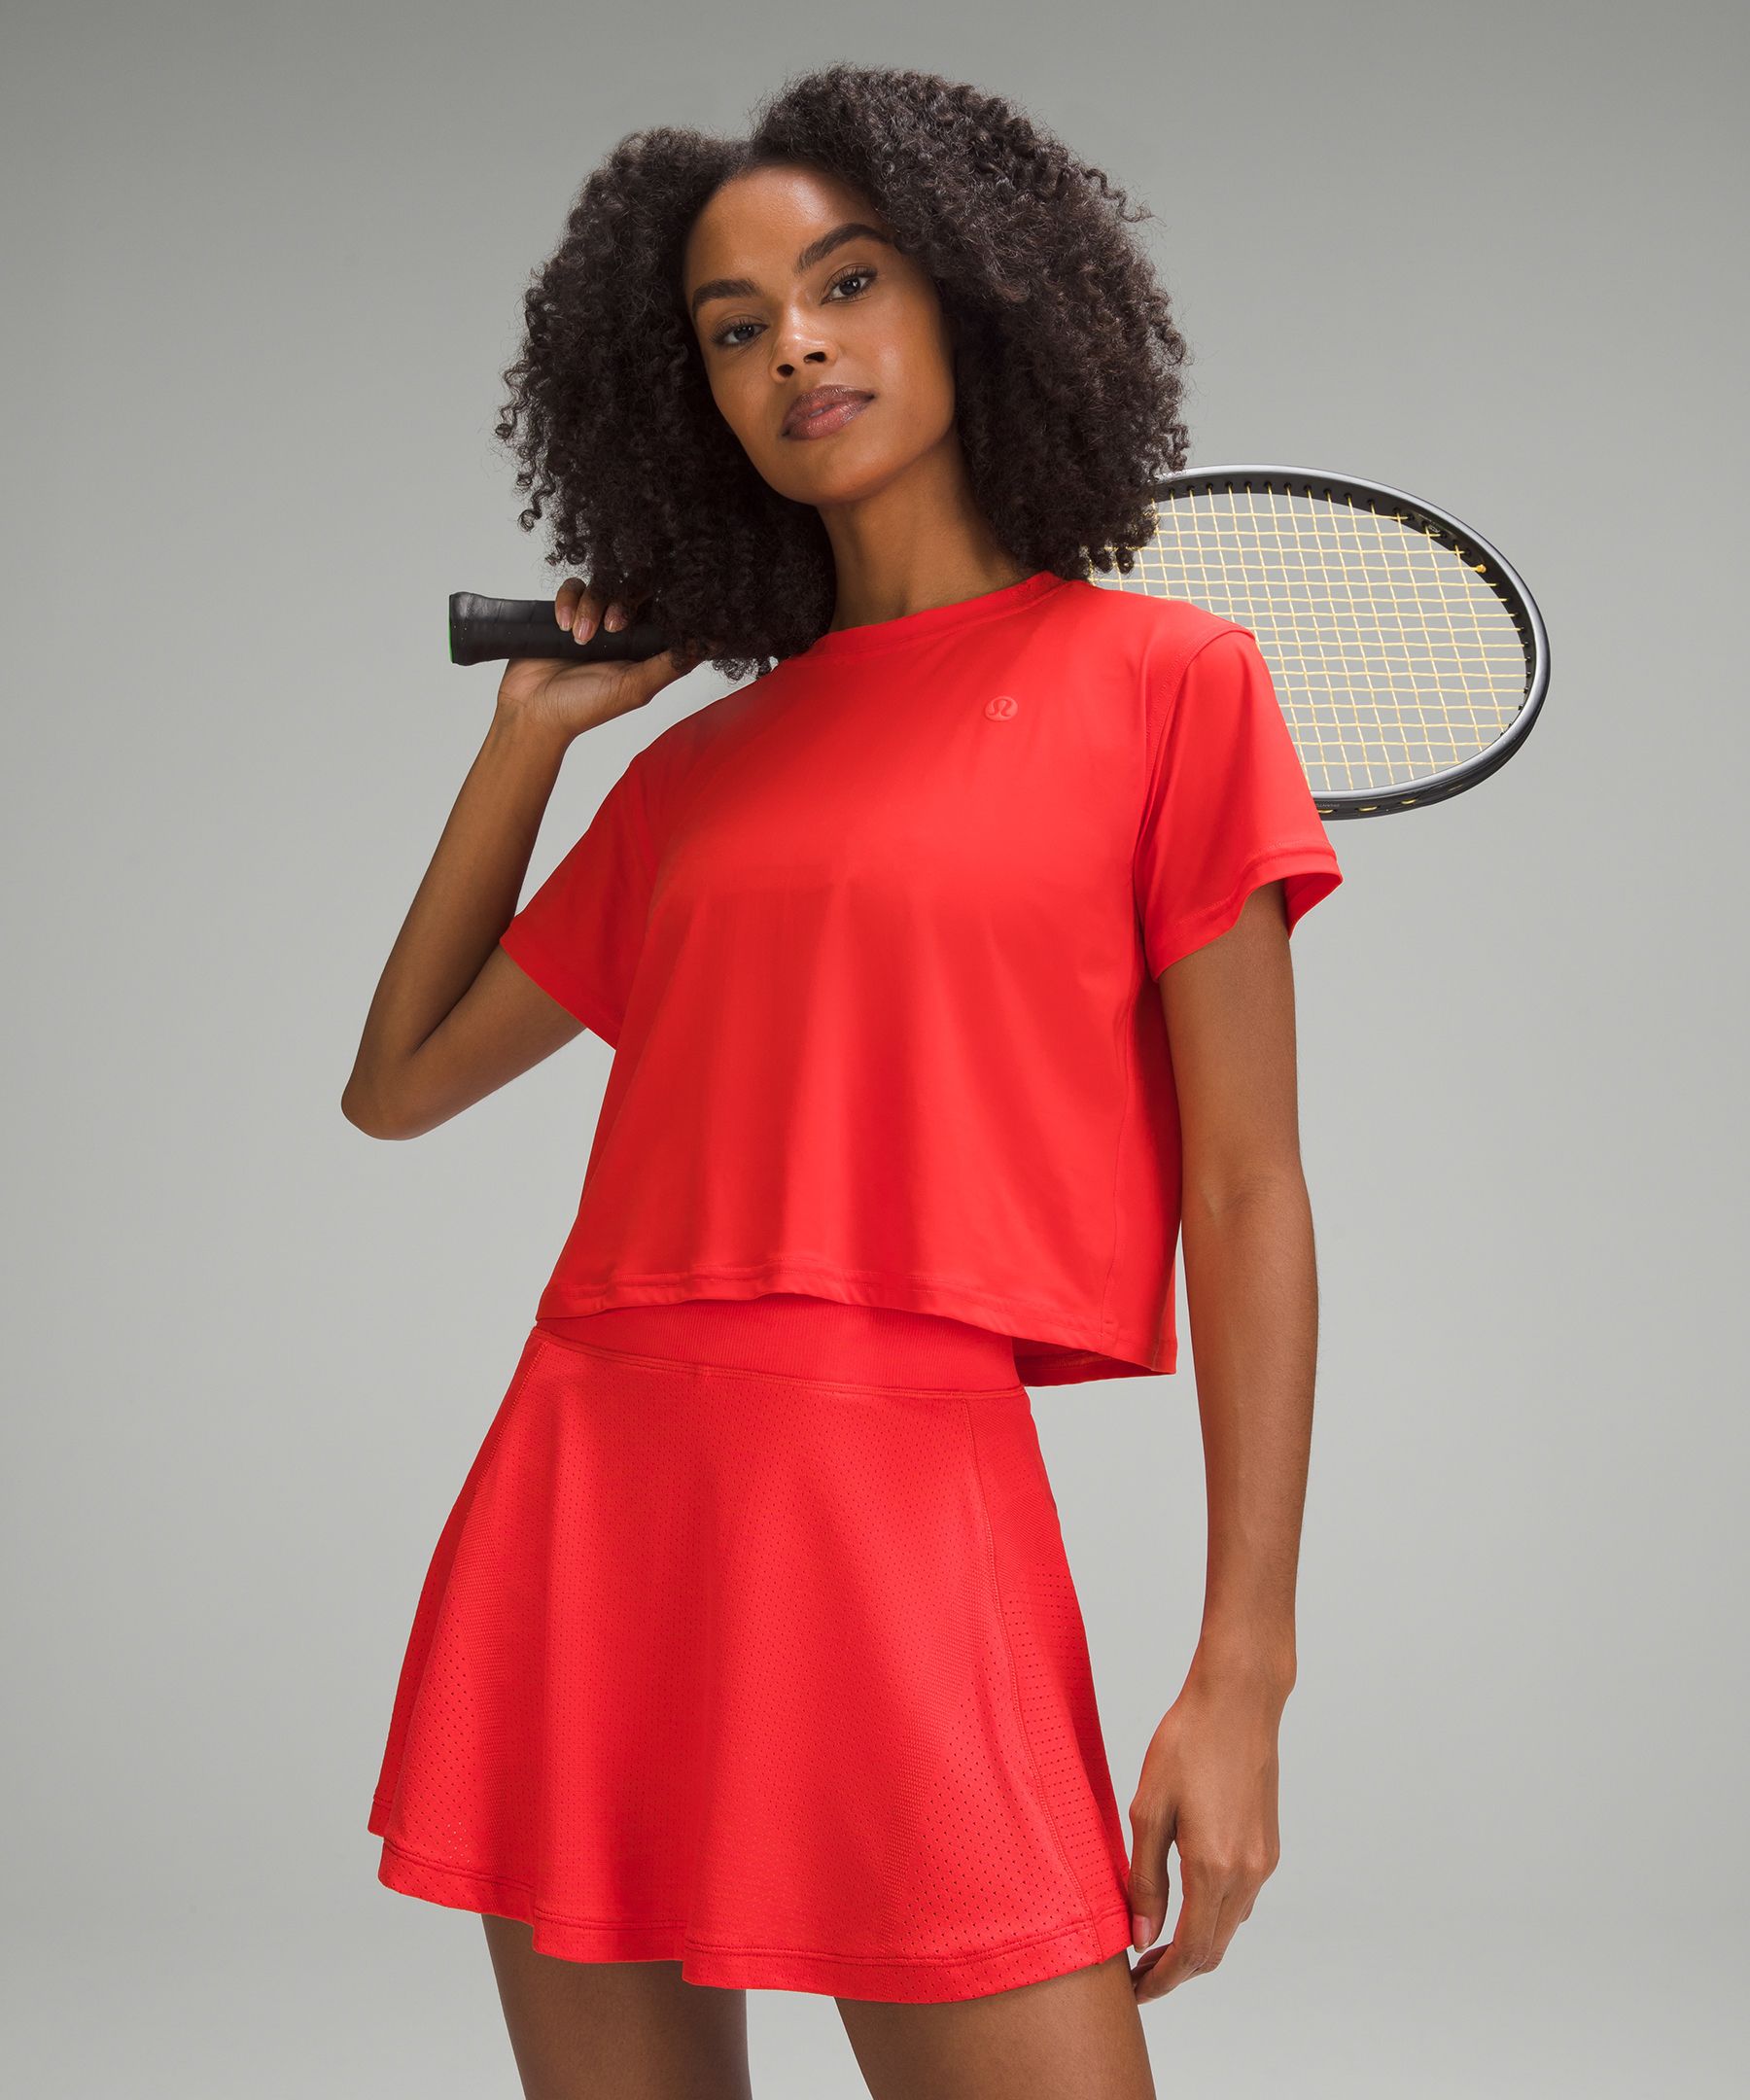 Lululemon Swiftly Tech High-Rise Skirt *Tennis. 6